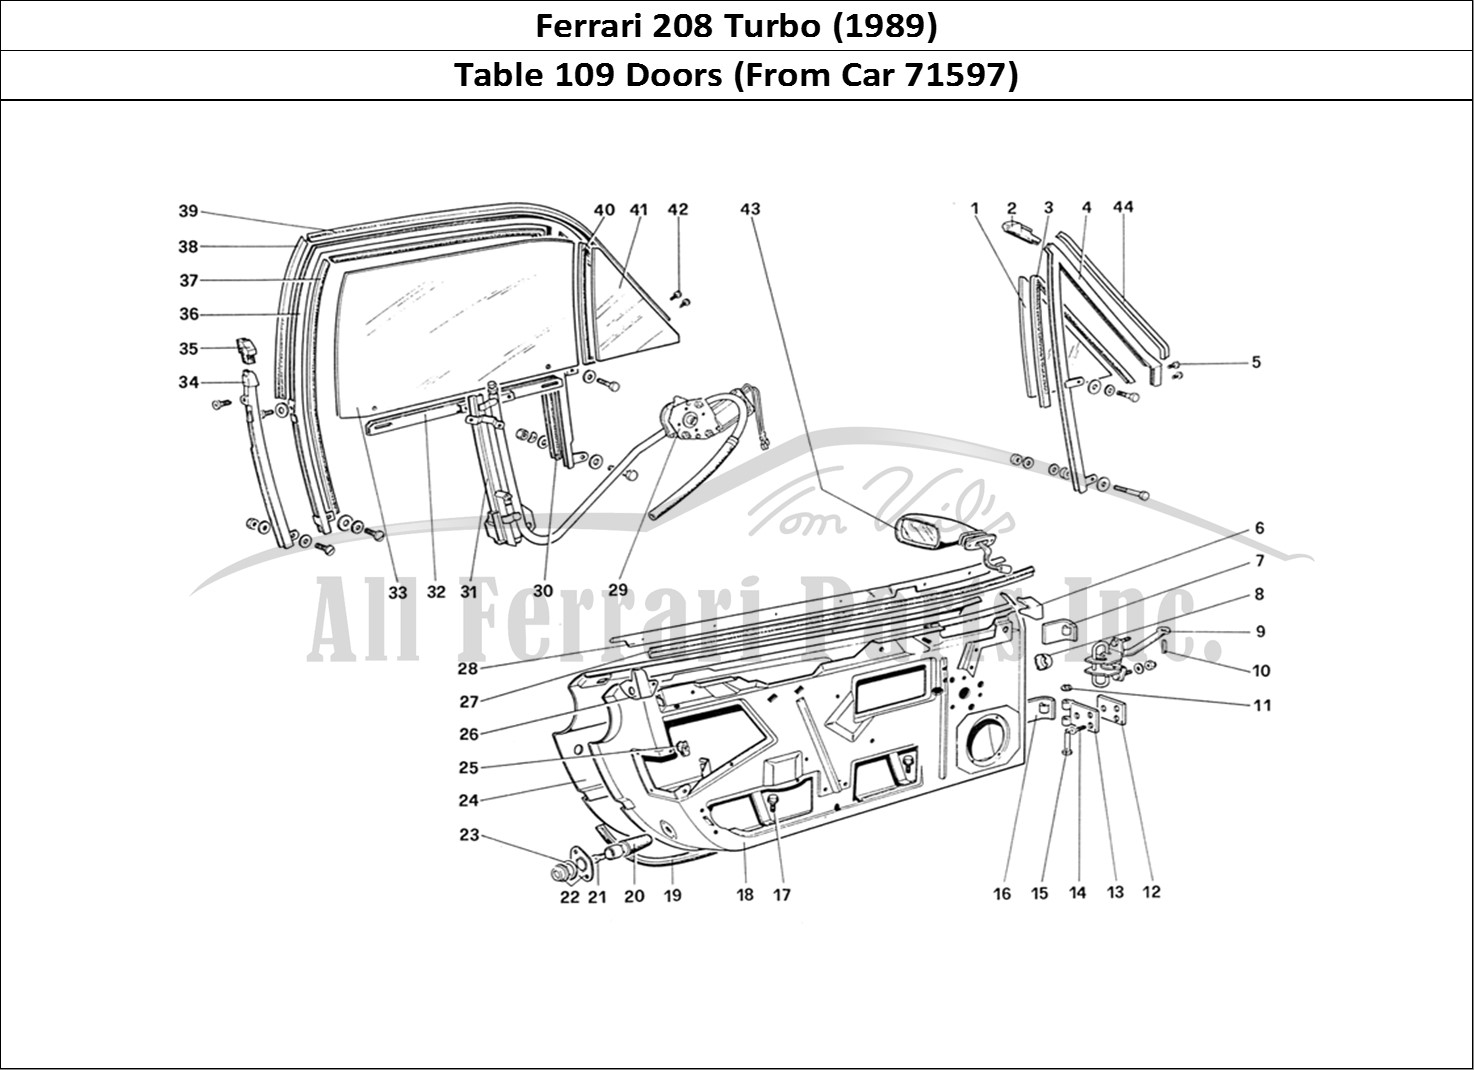 Ferrari Parts Ferrari 208 Turbo (1989) Page 109 Doors (From Car 71597)